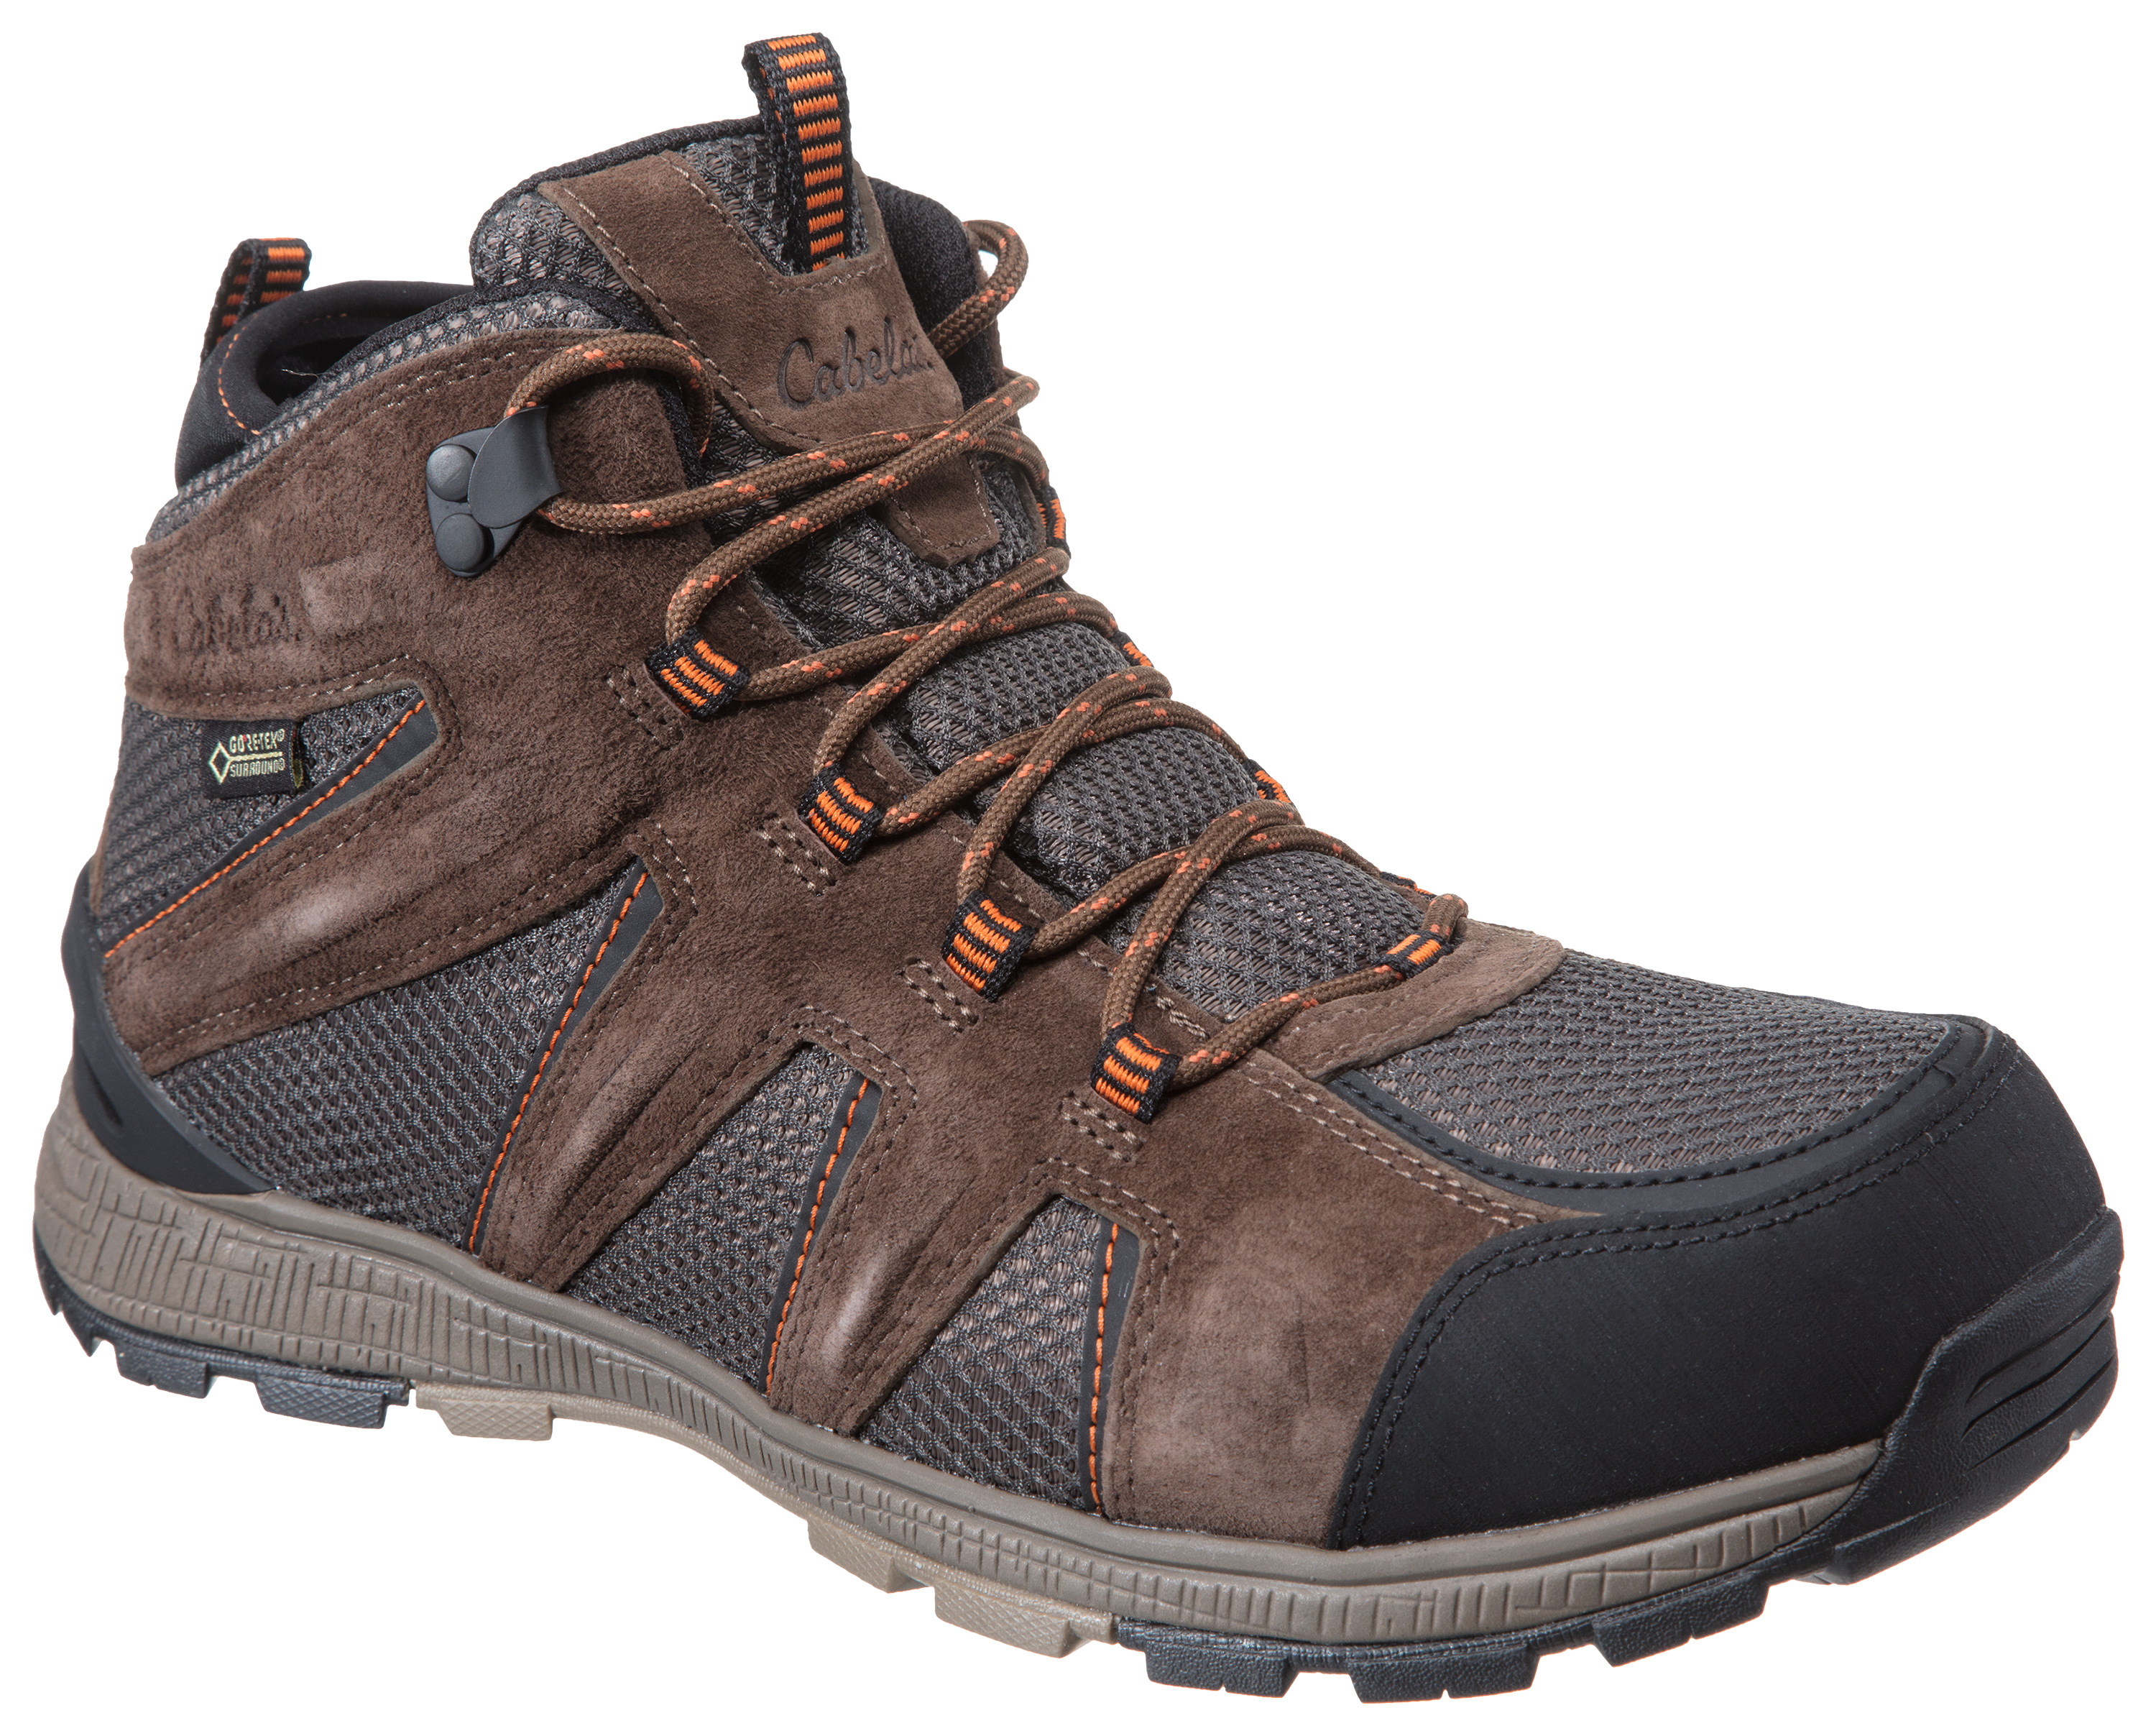 Cabela's 360 Mid GORE-TEX Hiking Boots for Men - Teak - 10M